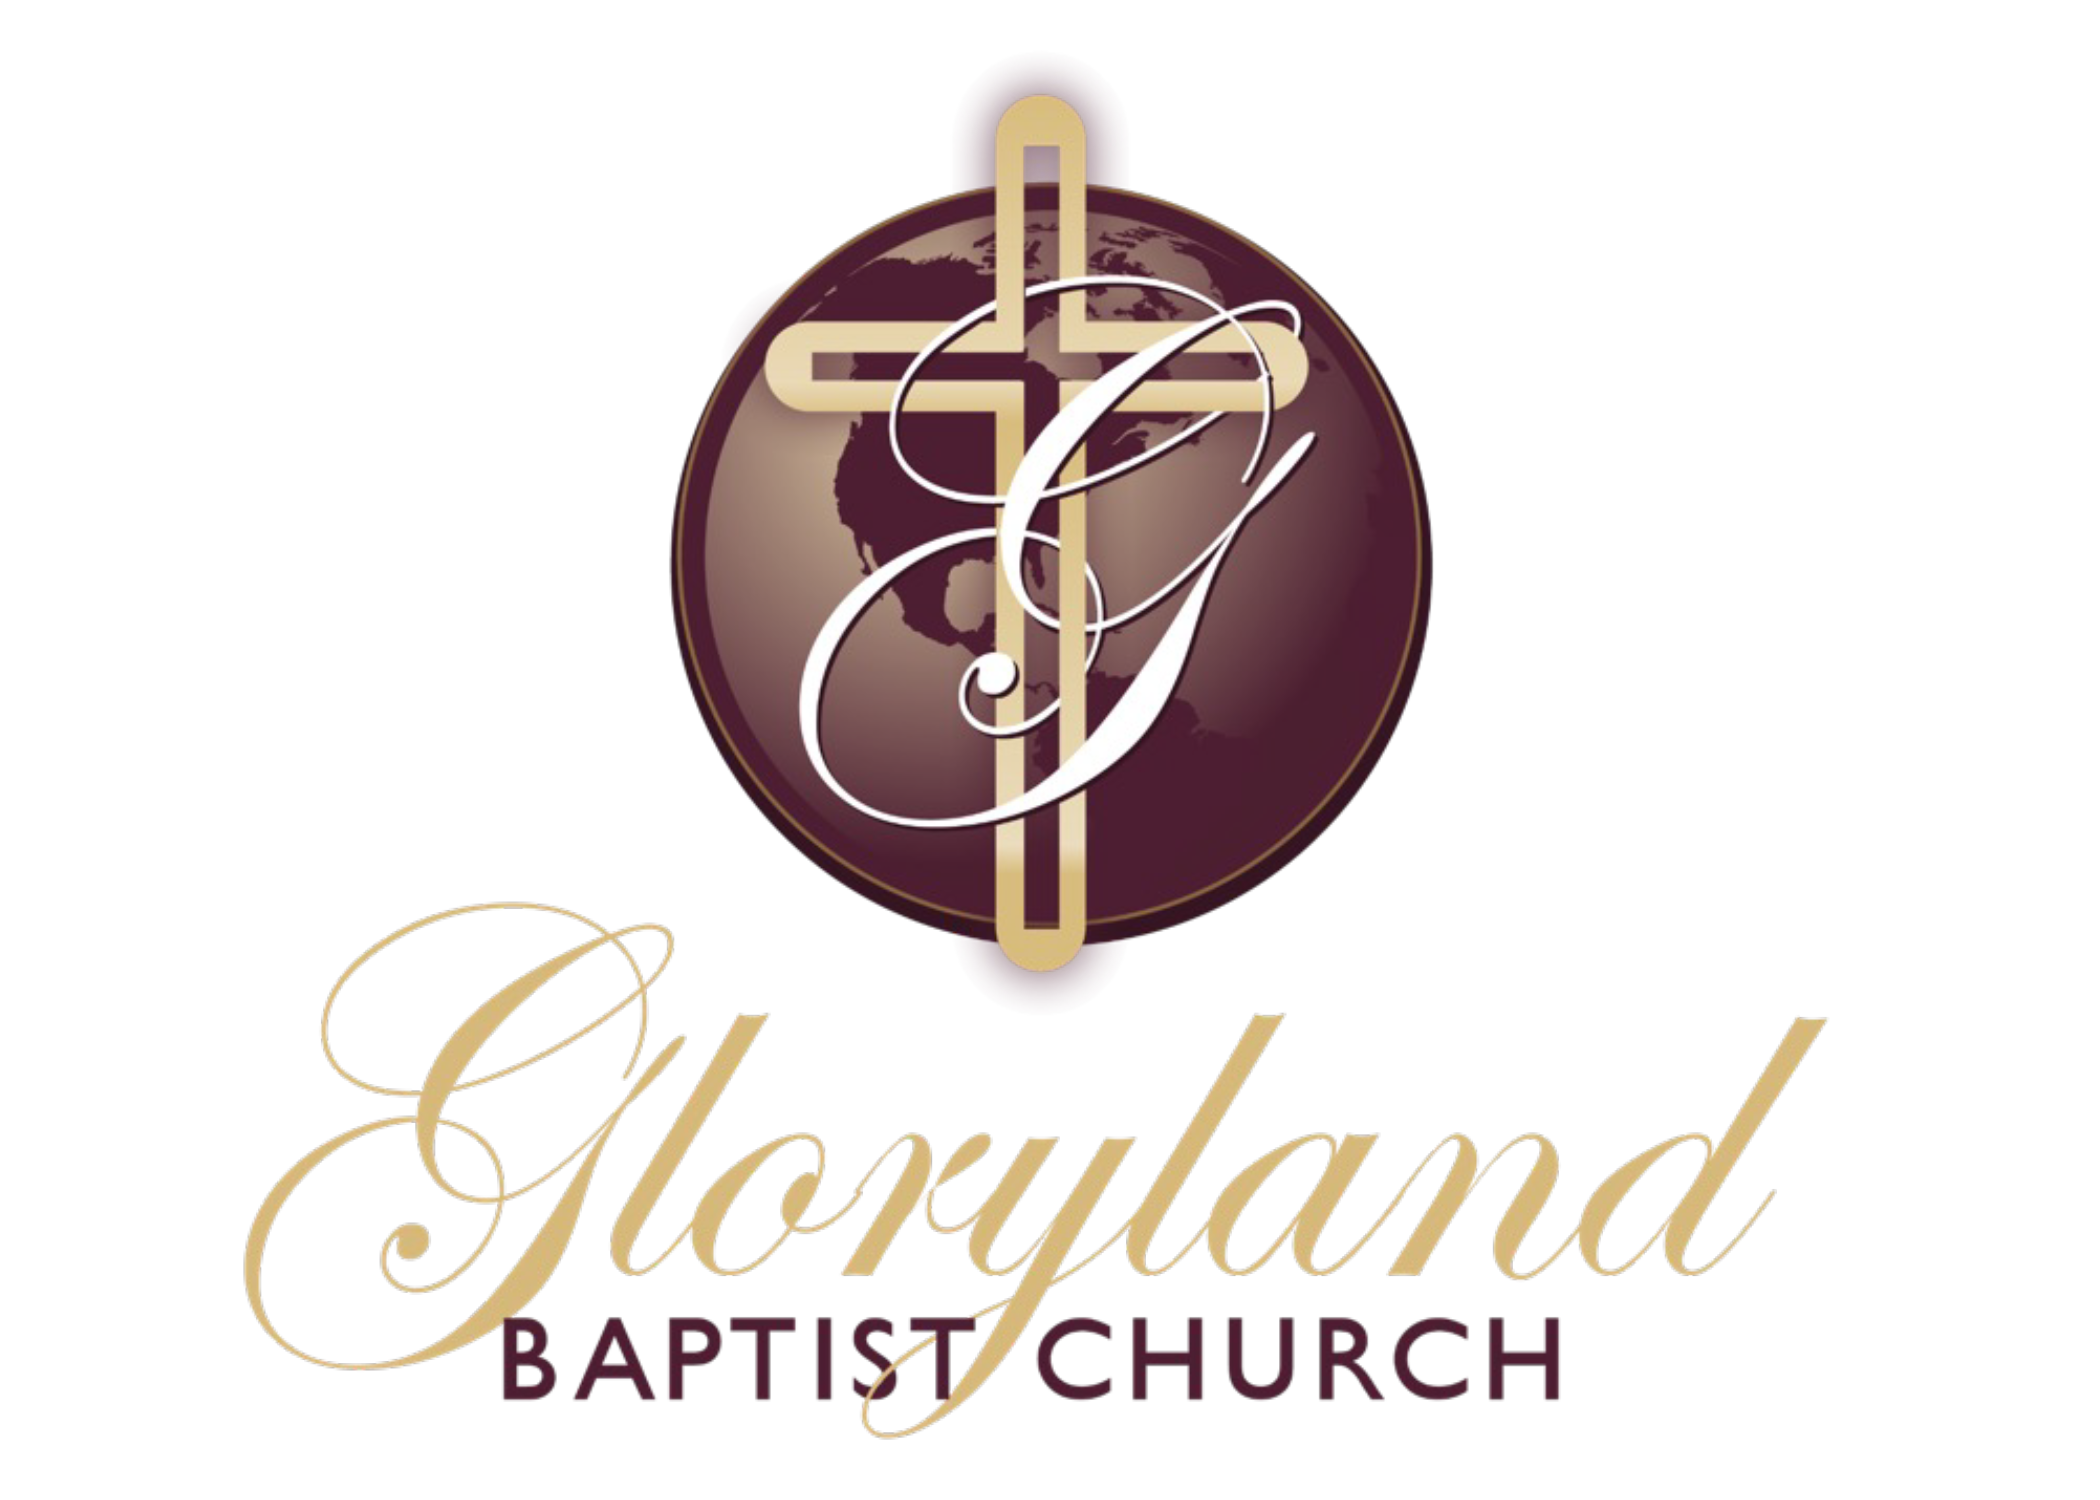 GLORYLAND BAPTIST CHURCH